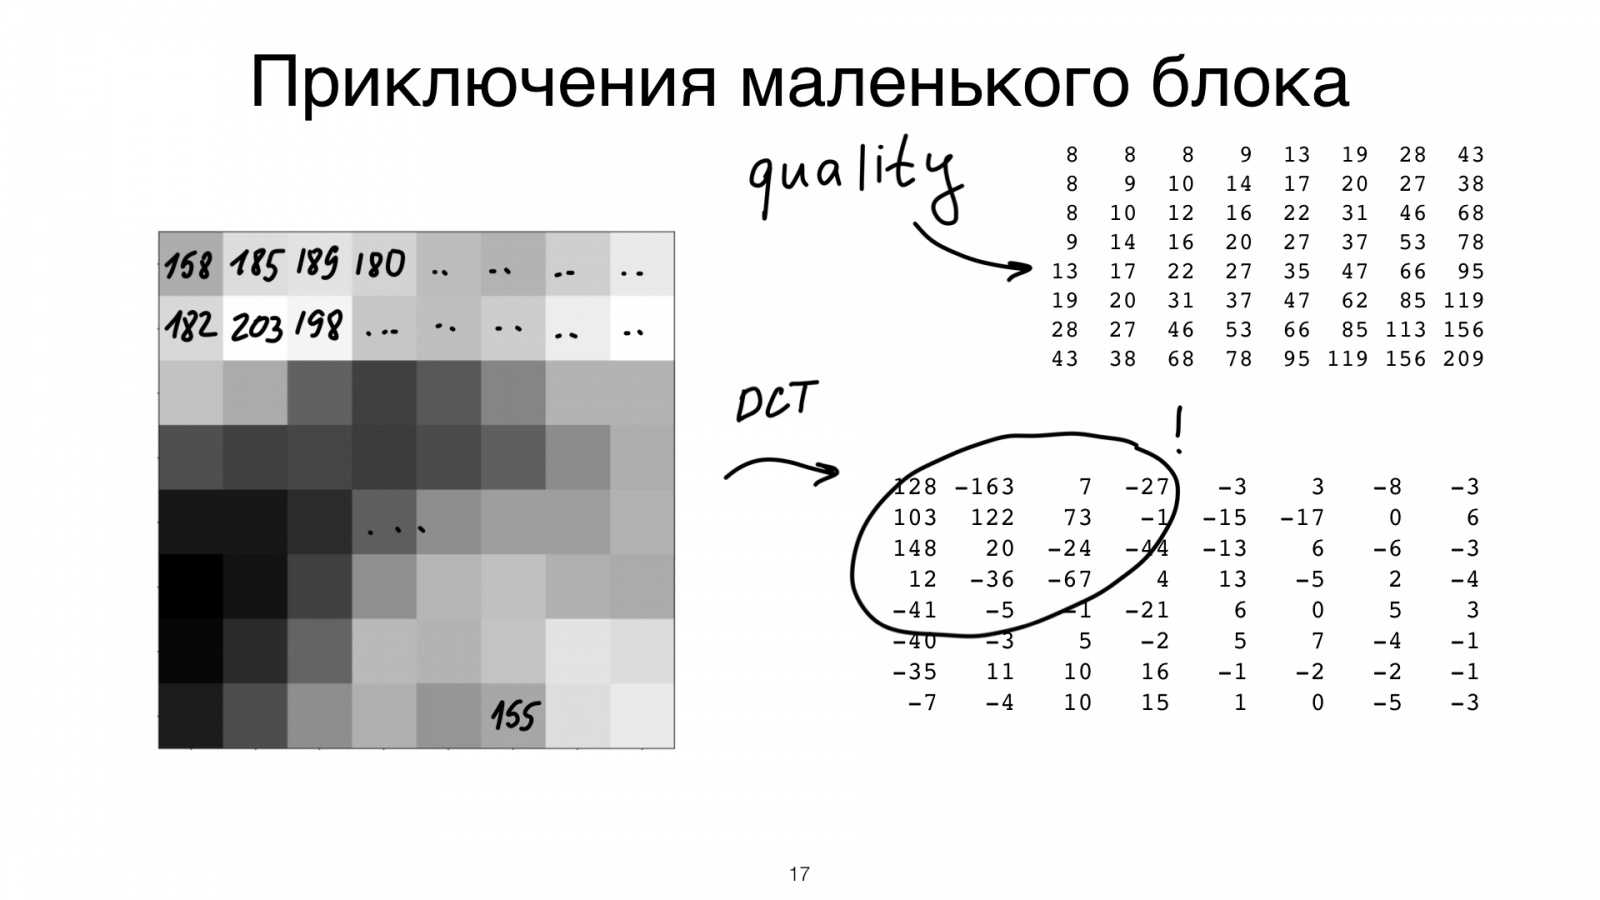 Картинки как коробки — что внутри? Доклад в Яндексе - 18